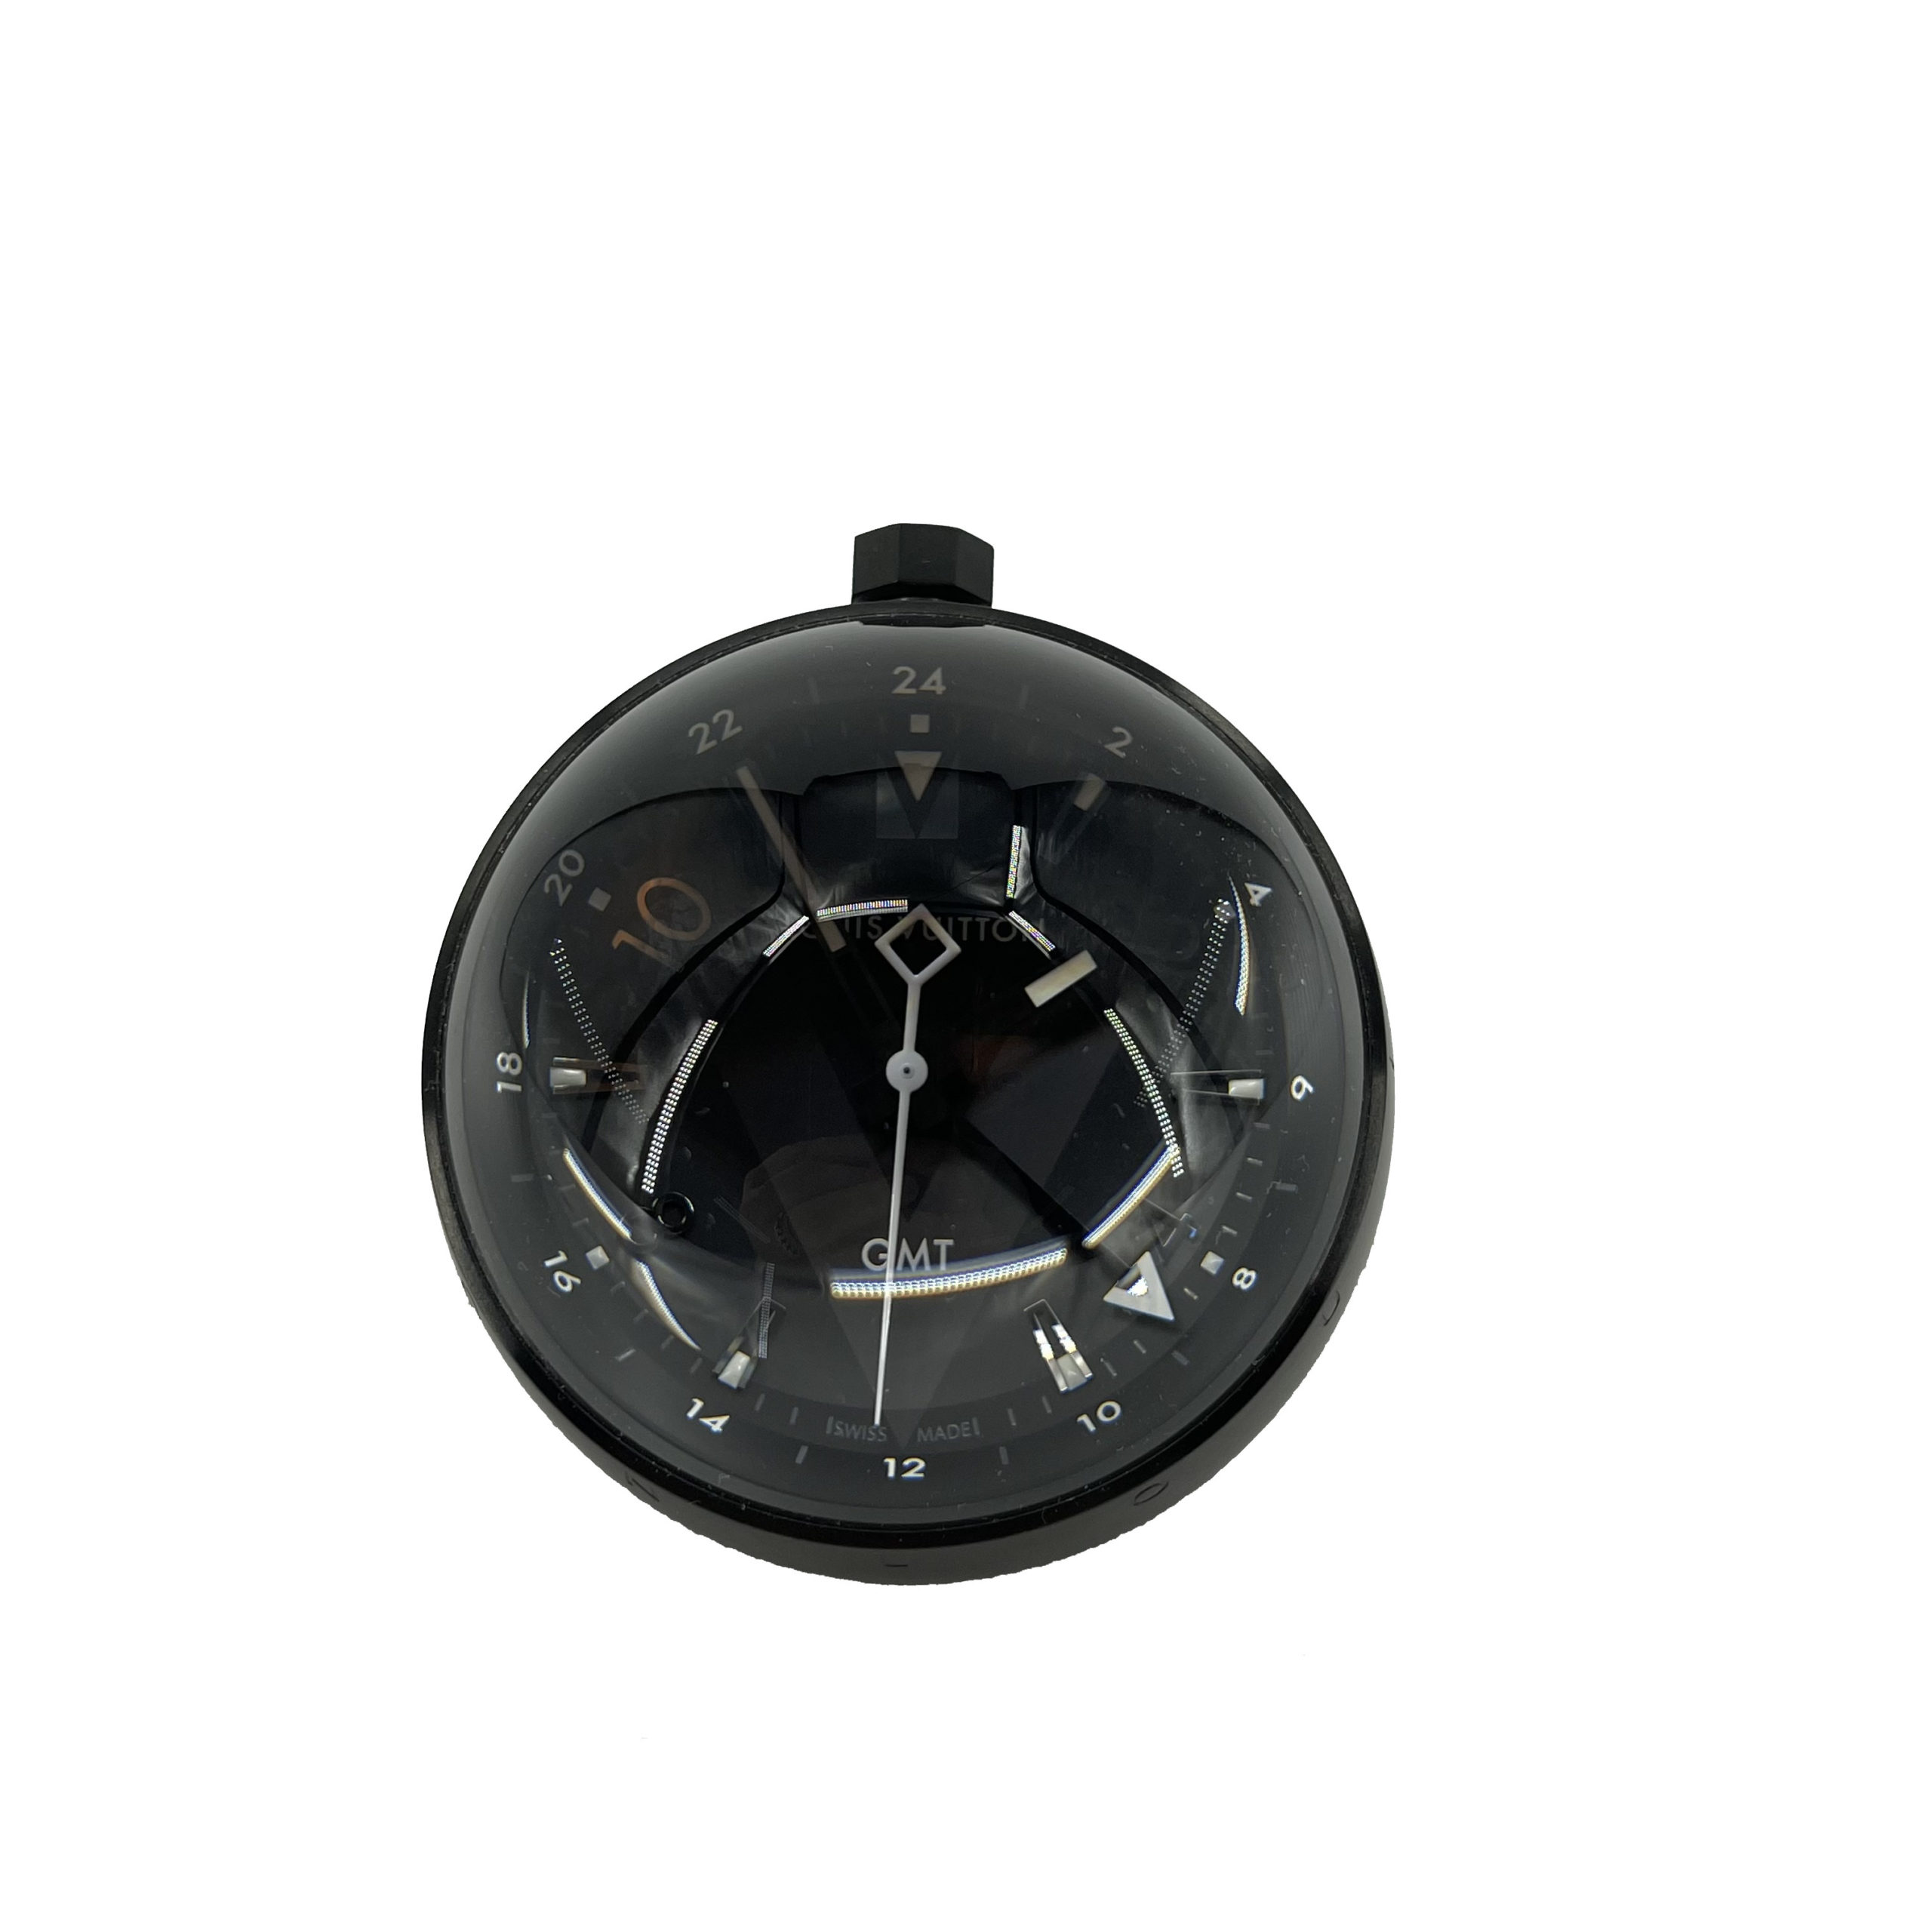 Louis Vuitton Tambour Table Clock